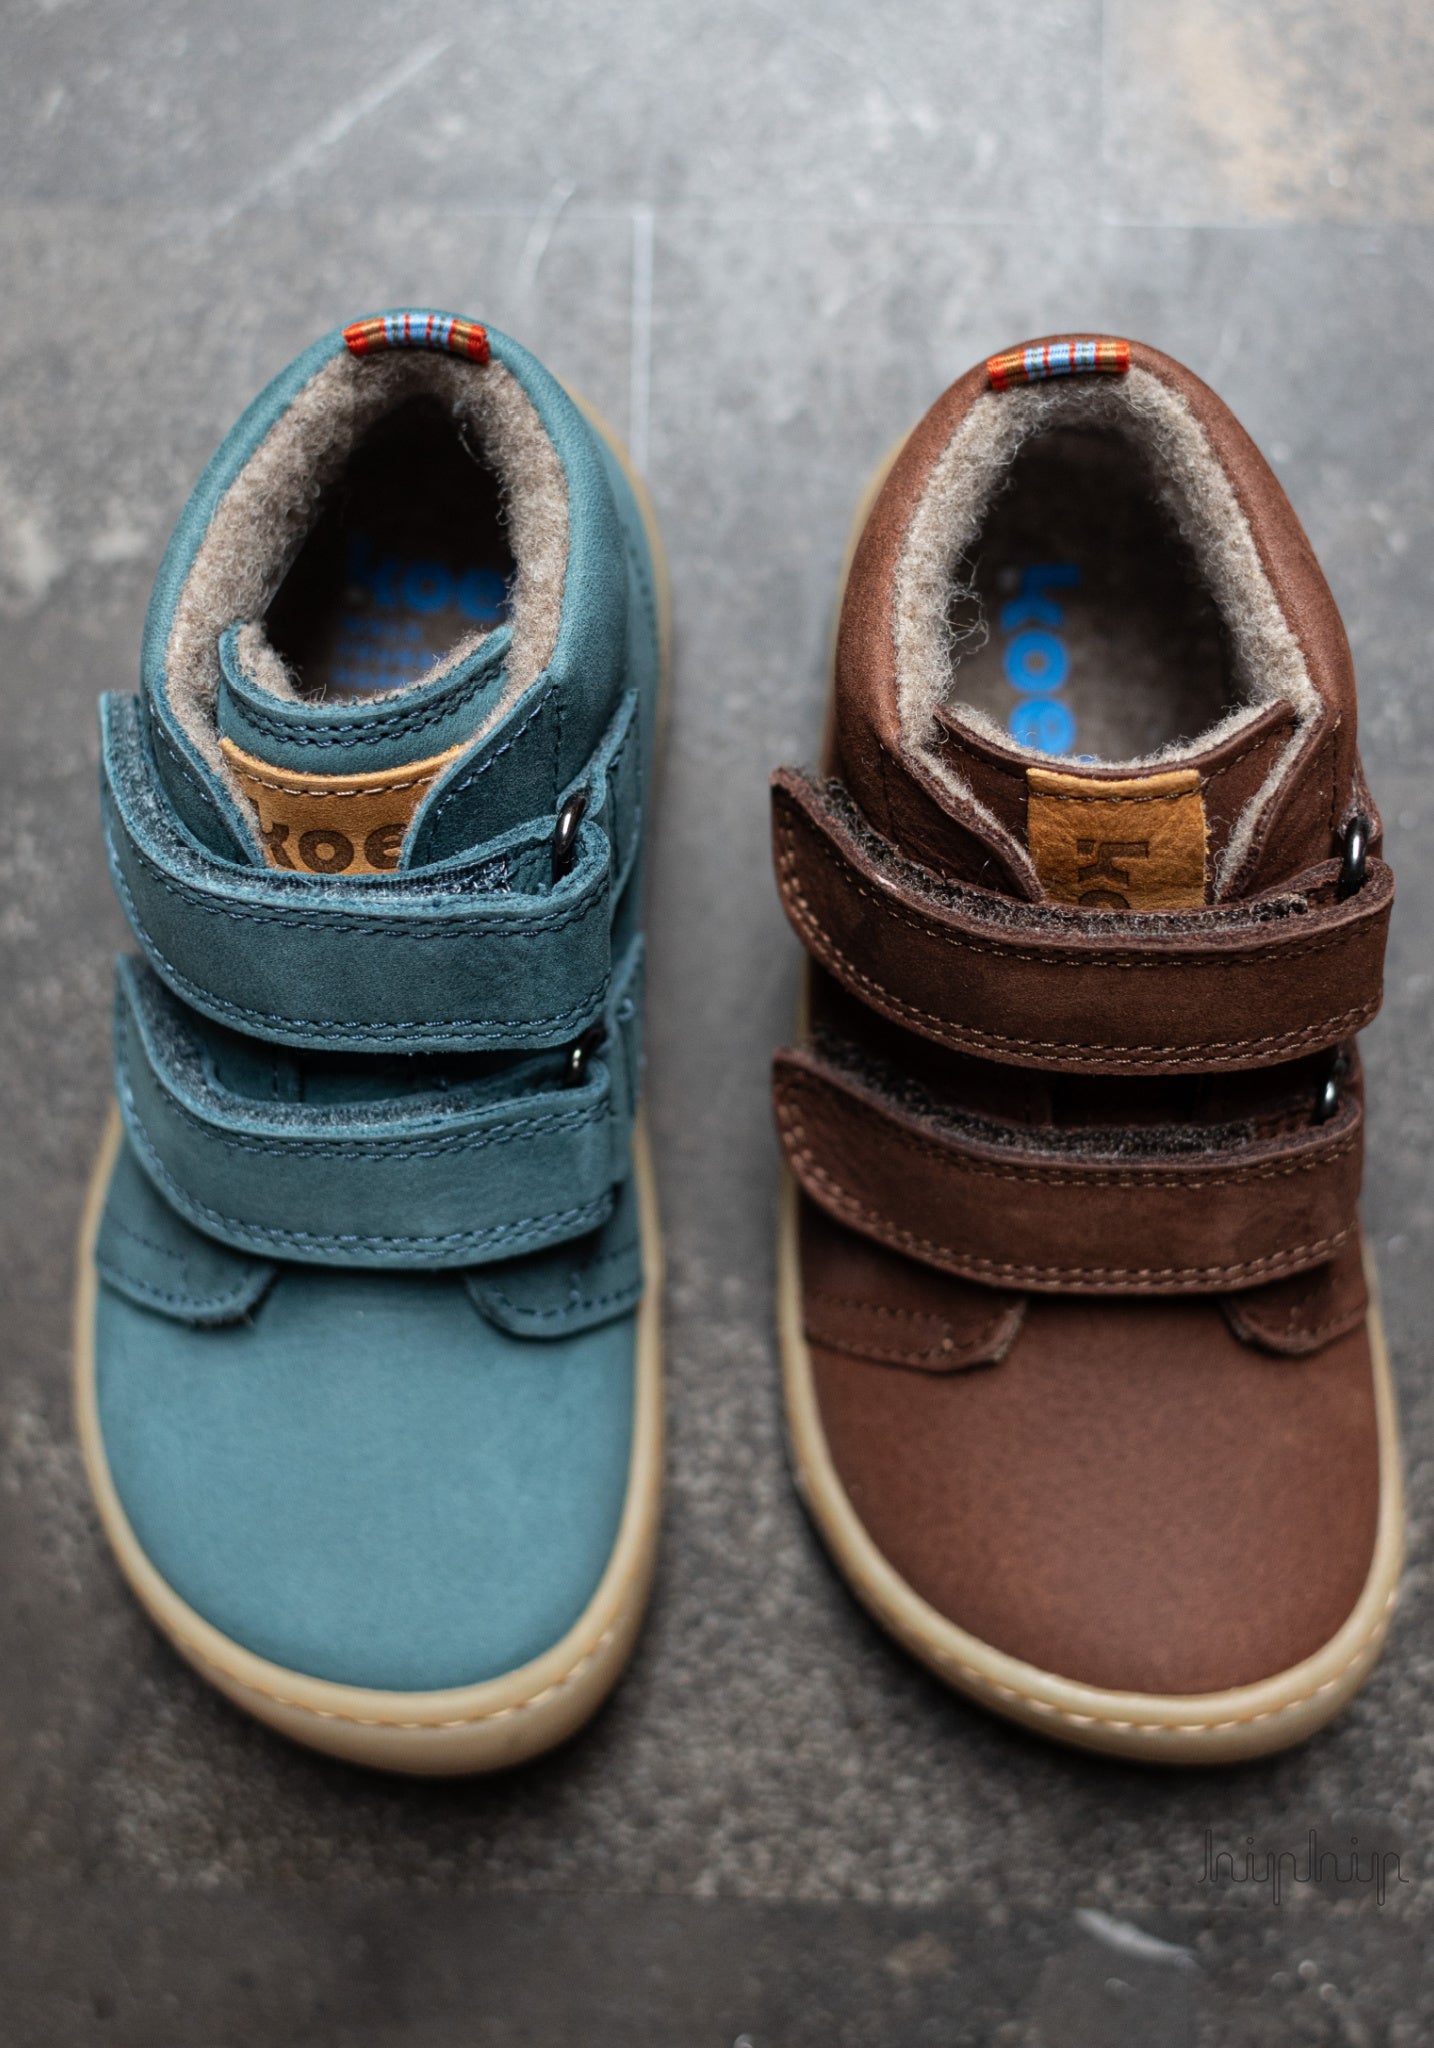 Sneakers Barefoot îmblăniți - Don Hydro Turquoise Koel HipHip.ro